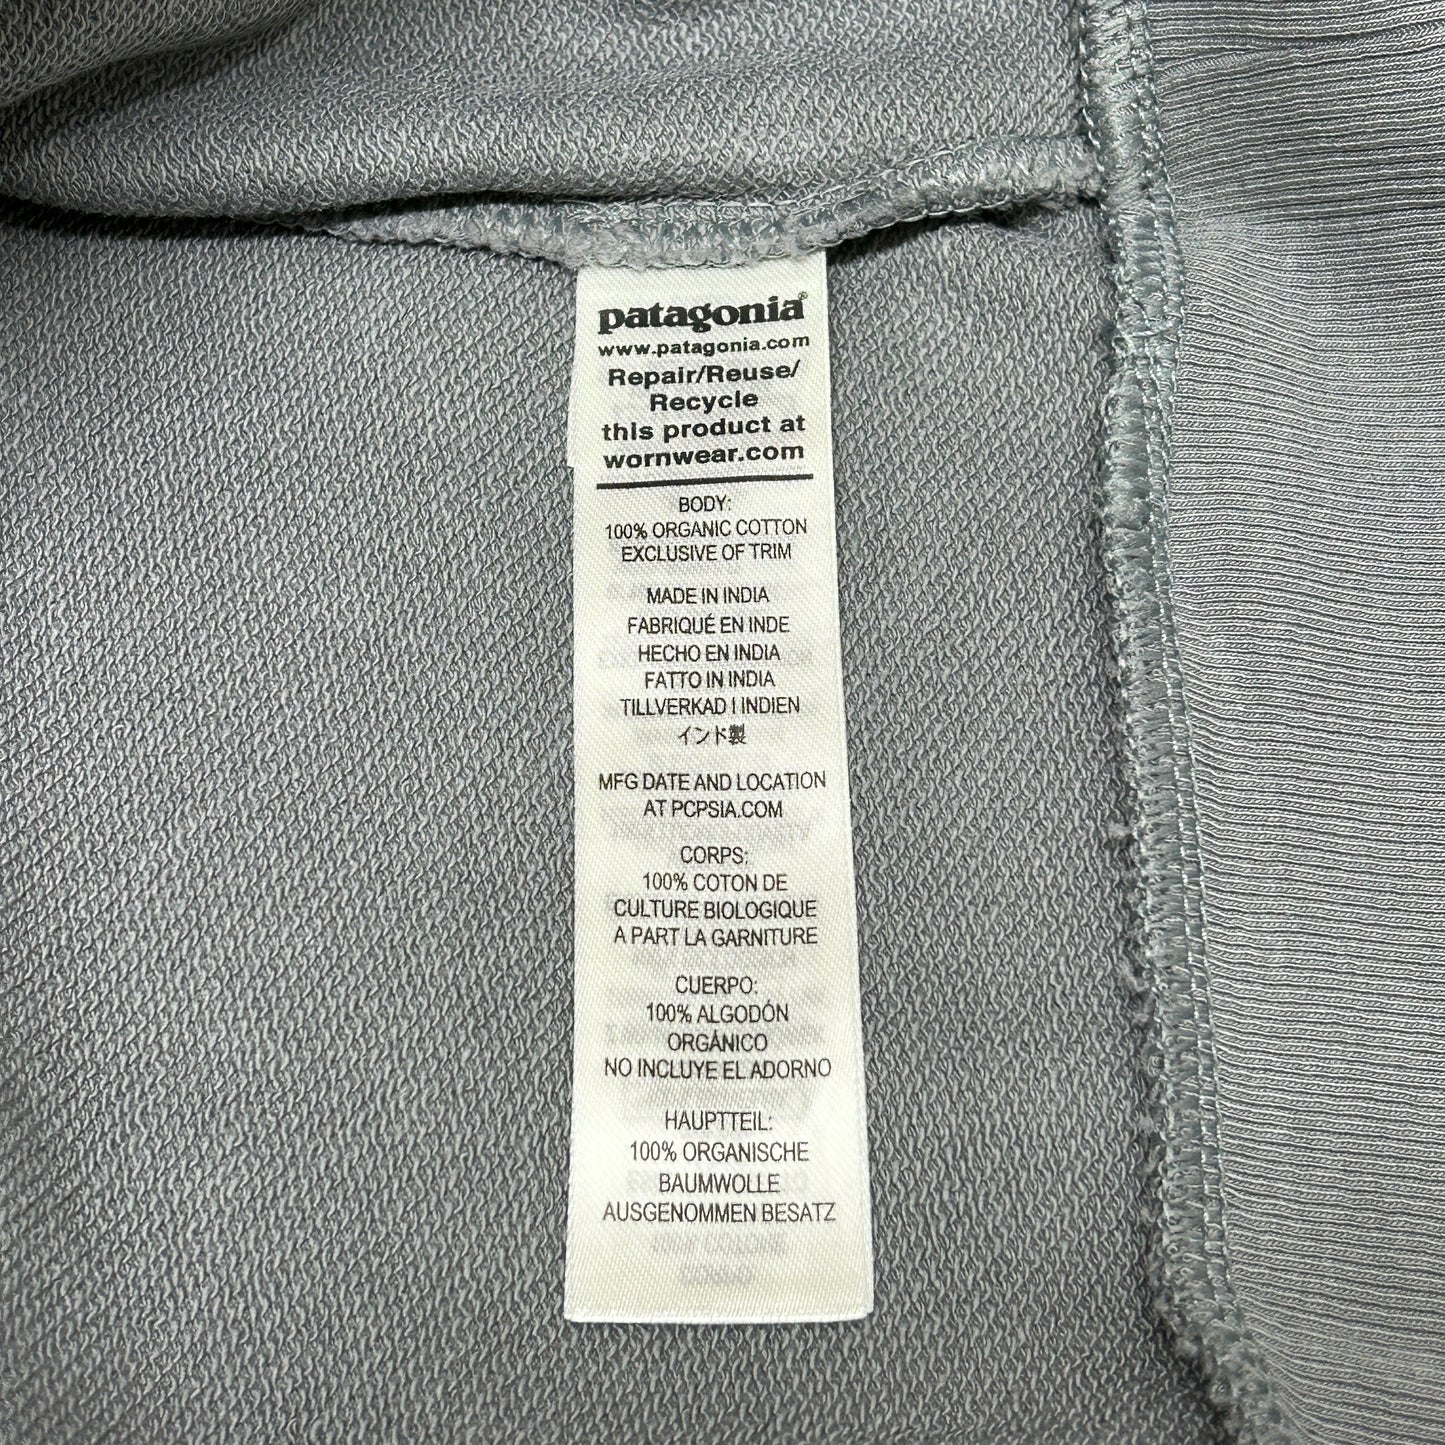 PATAGONIA Regenerative Organic Cotton Hoody Sweatshirt Sz XL Noble Grey (New)